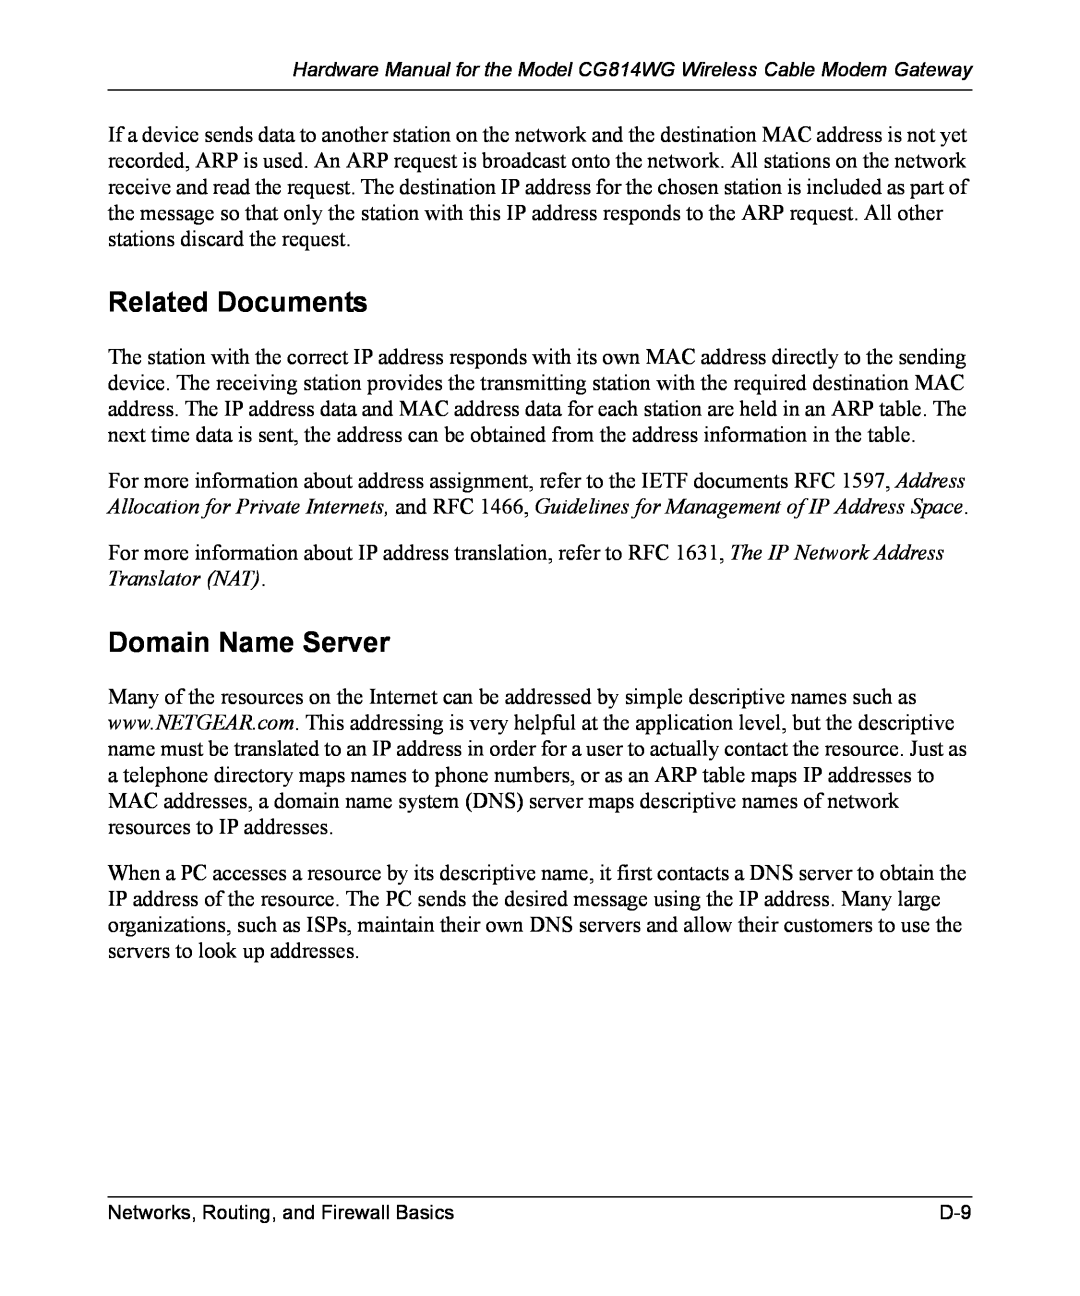 NETGEAR CG814WG manual Related Documents, Domain Name Server 